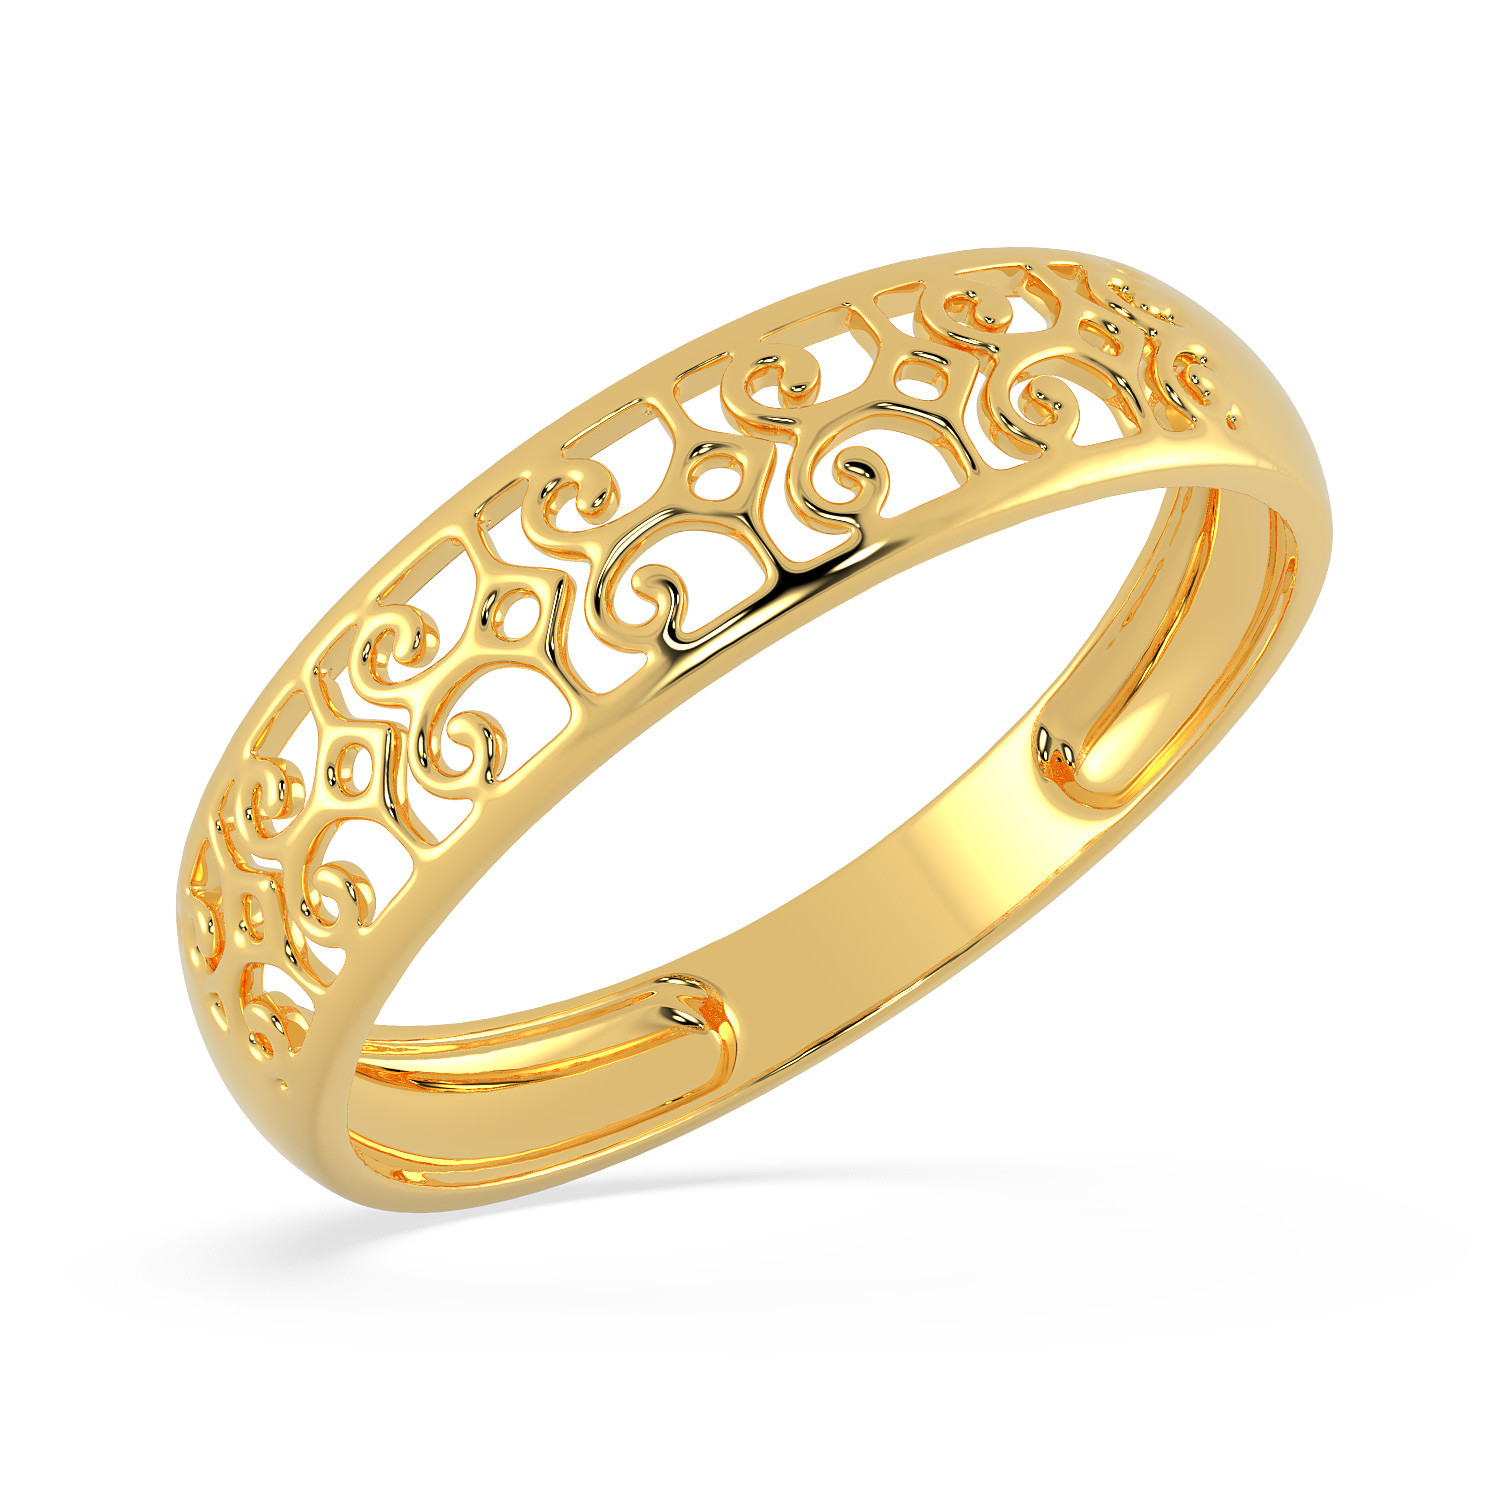 Buy Malabar Gold Ring SKYFRDZ014 for Women Online | Malabar Gold & Diamonds